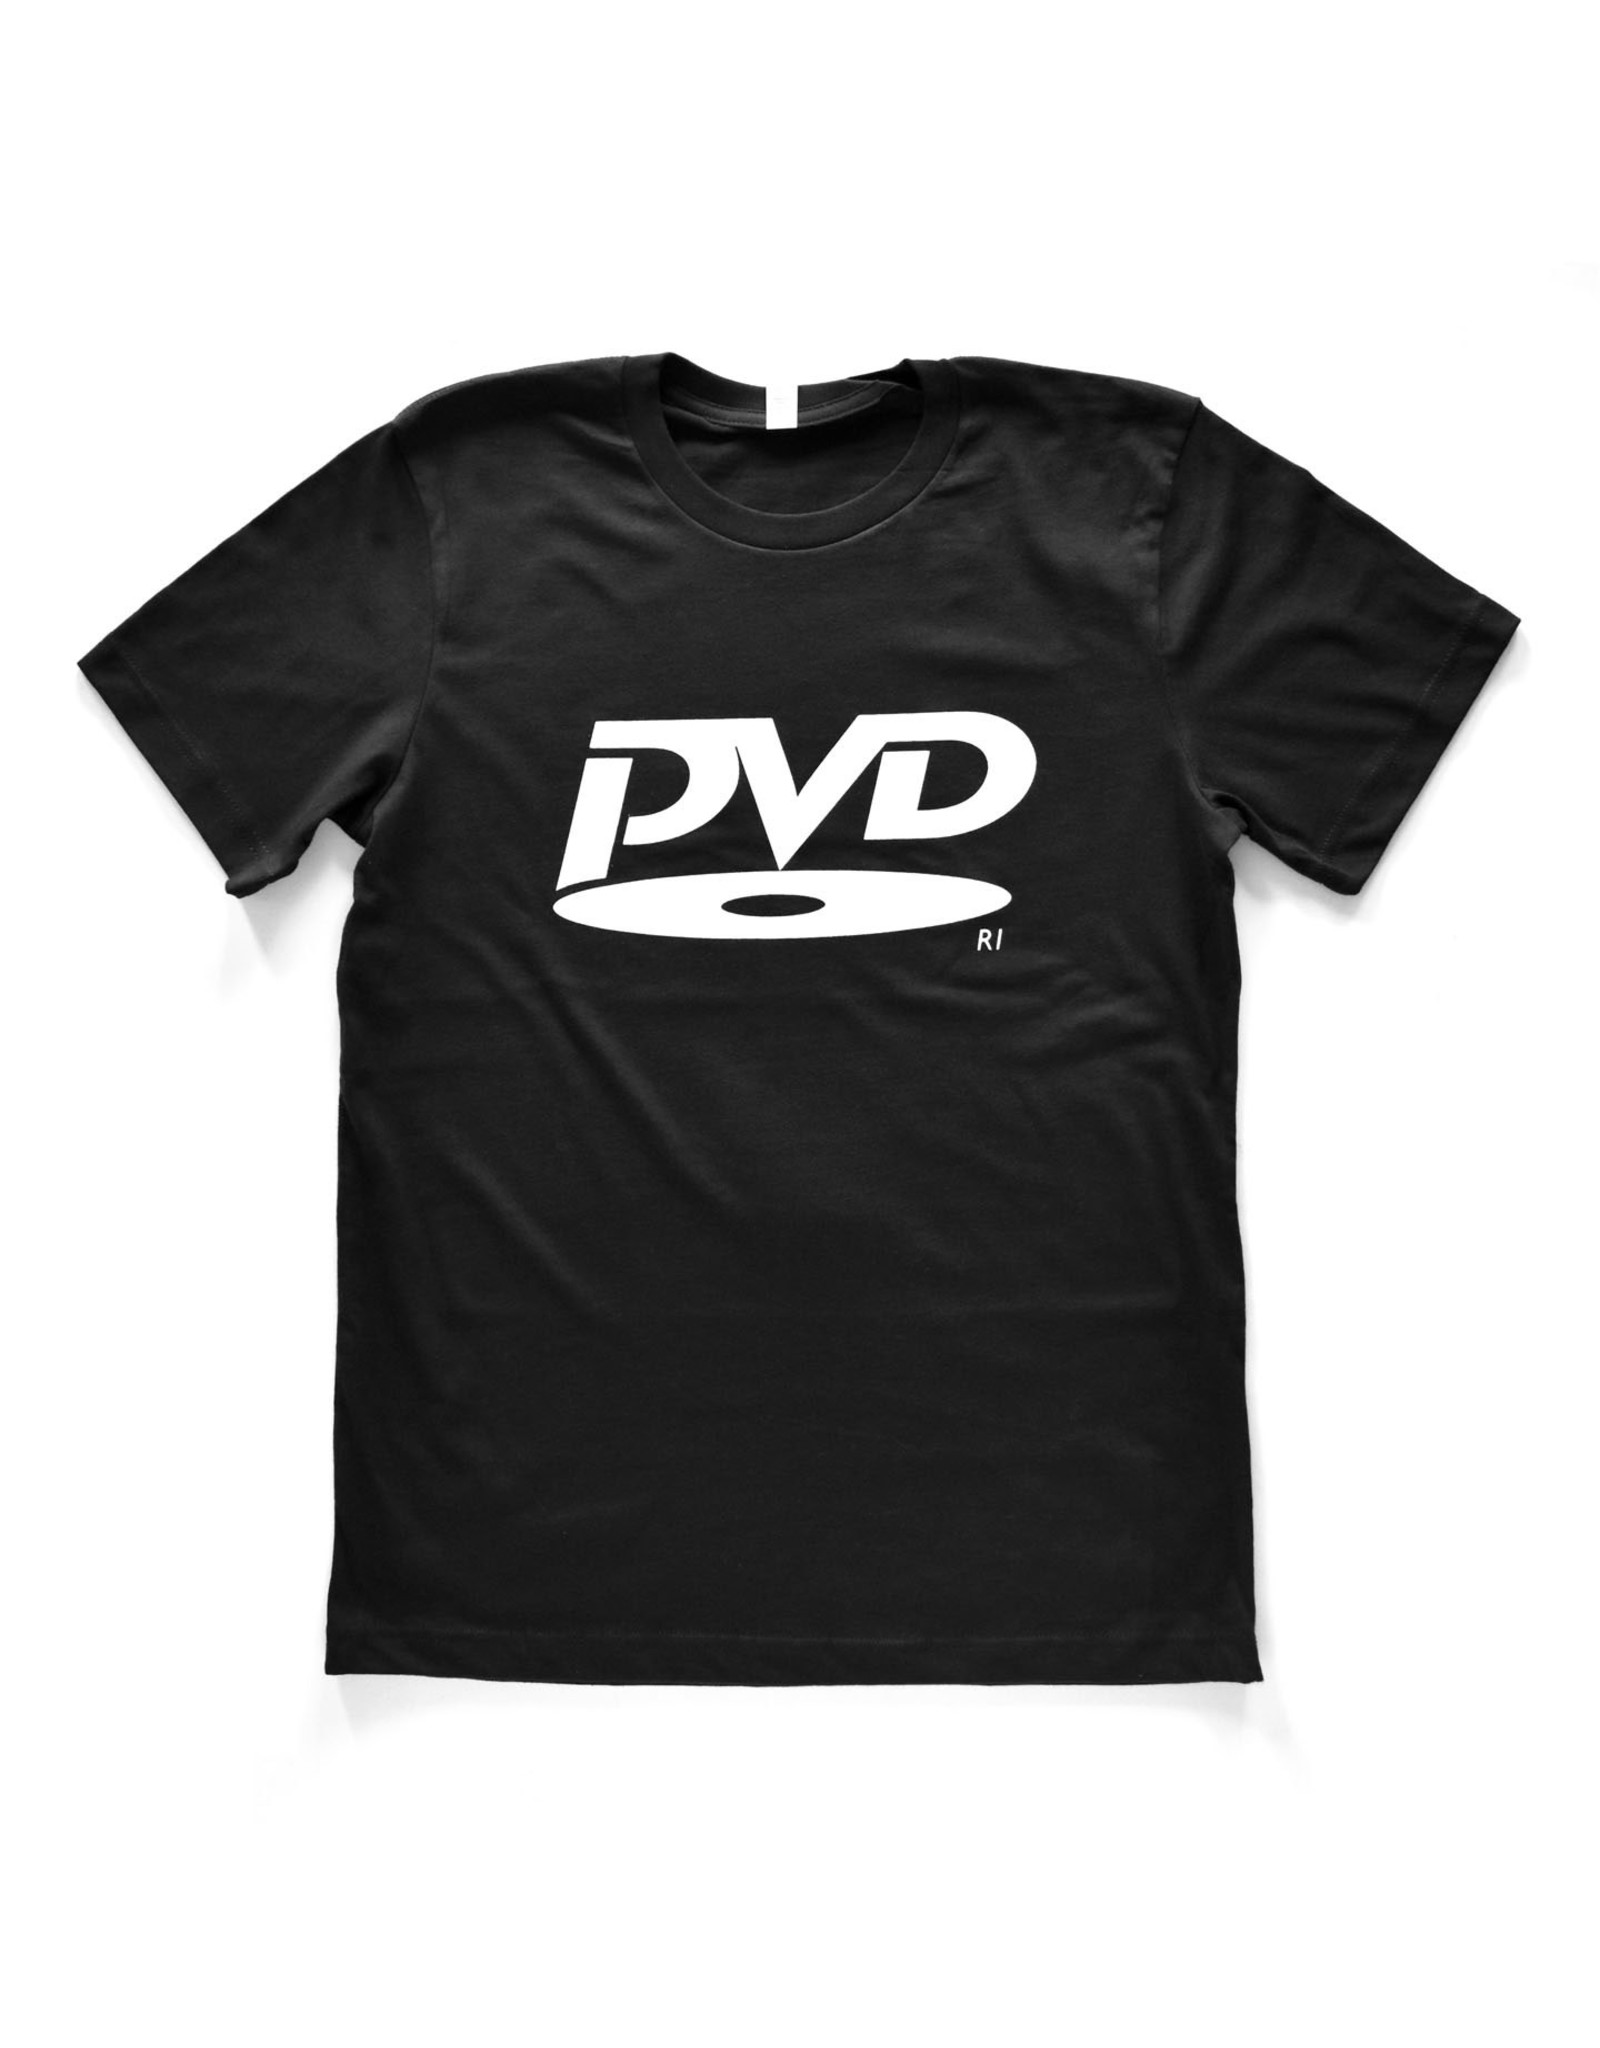 PVD DVD Shirt